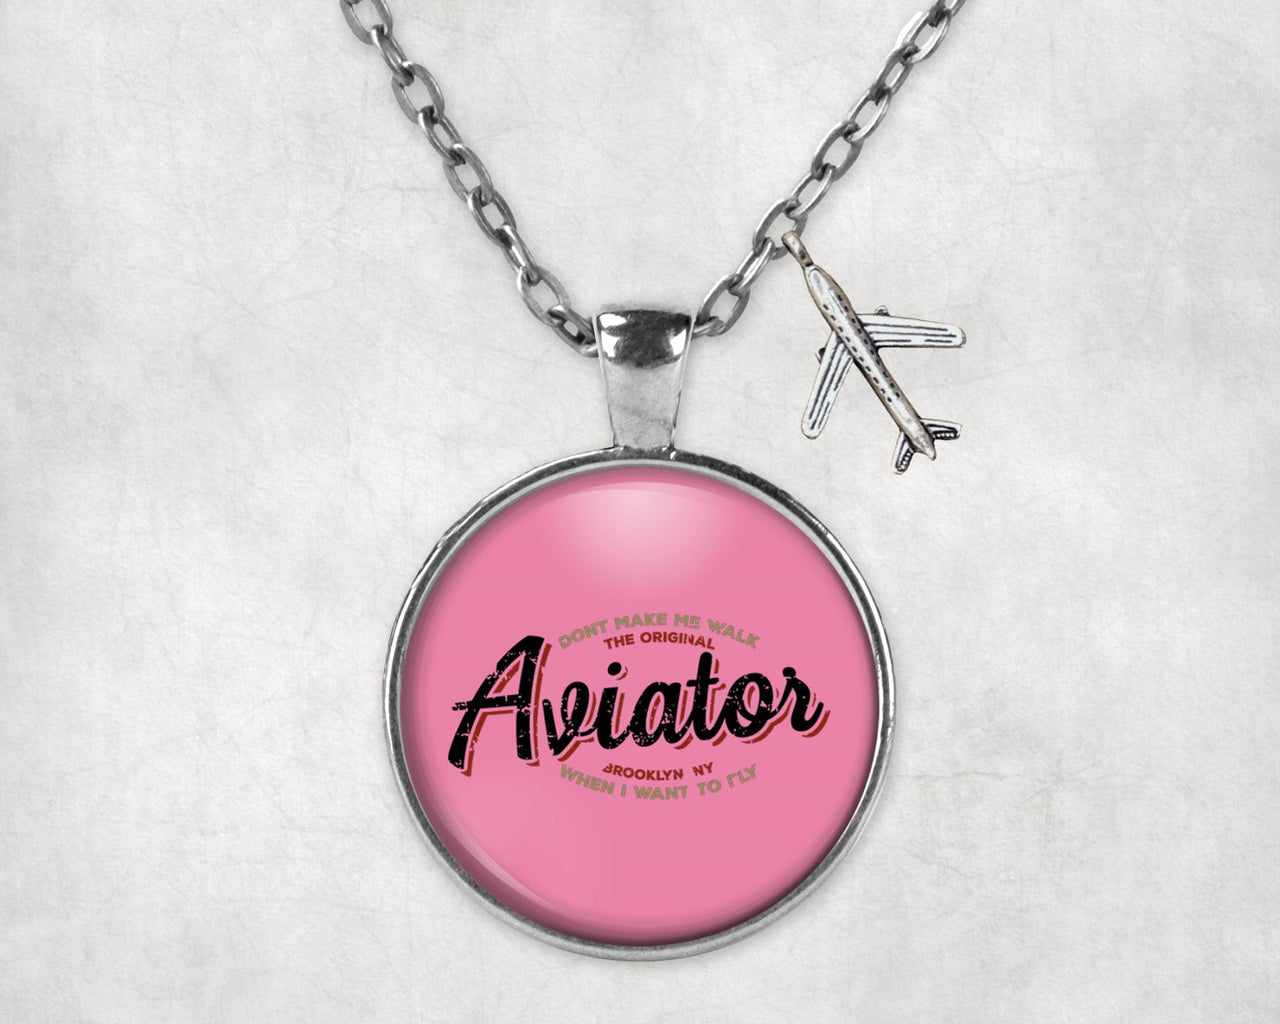 Aviator - Dont Make Me Walk Designed Necklaces